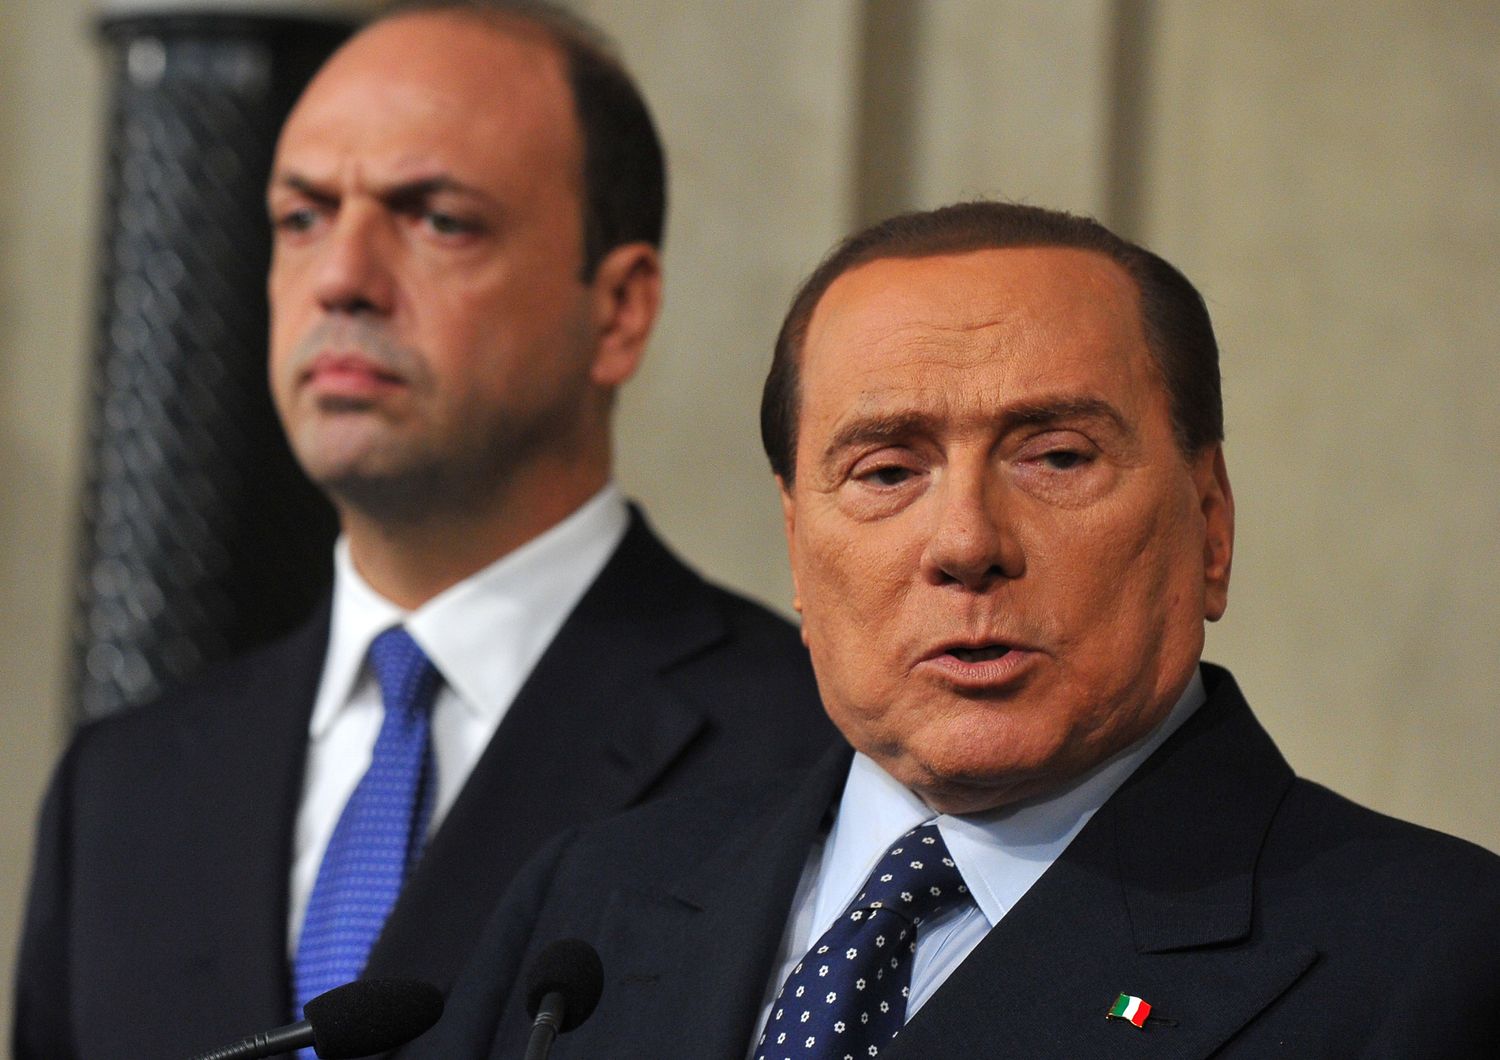 &nbsp;Berlusconi e Alfano (Afp)